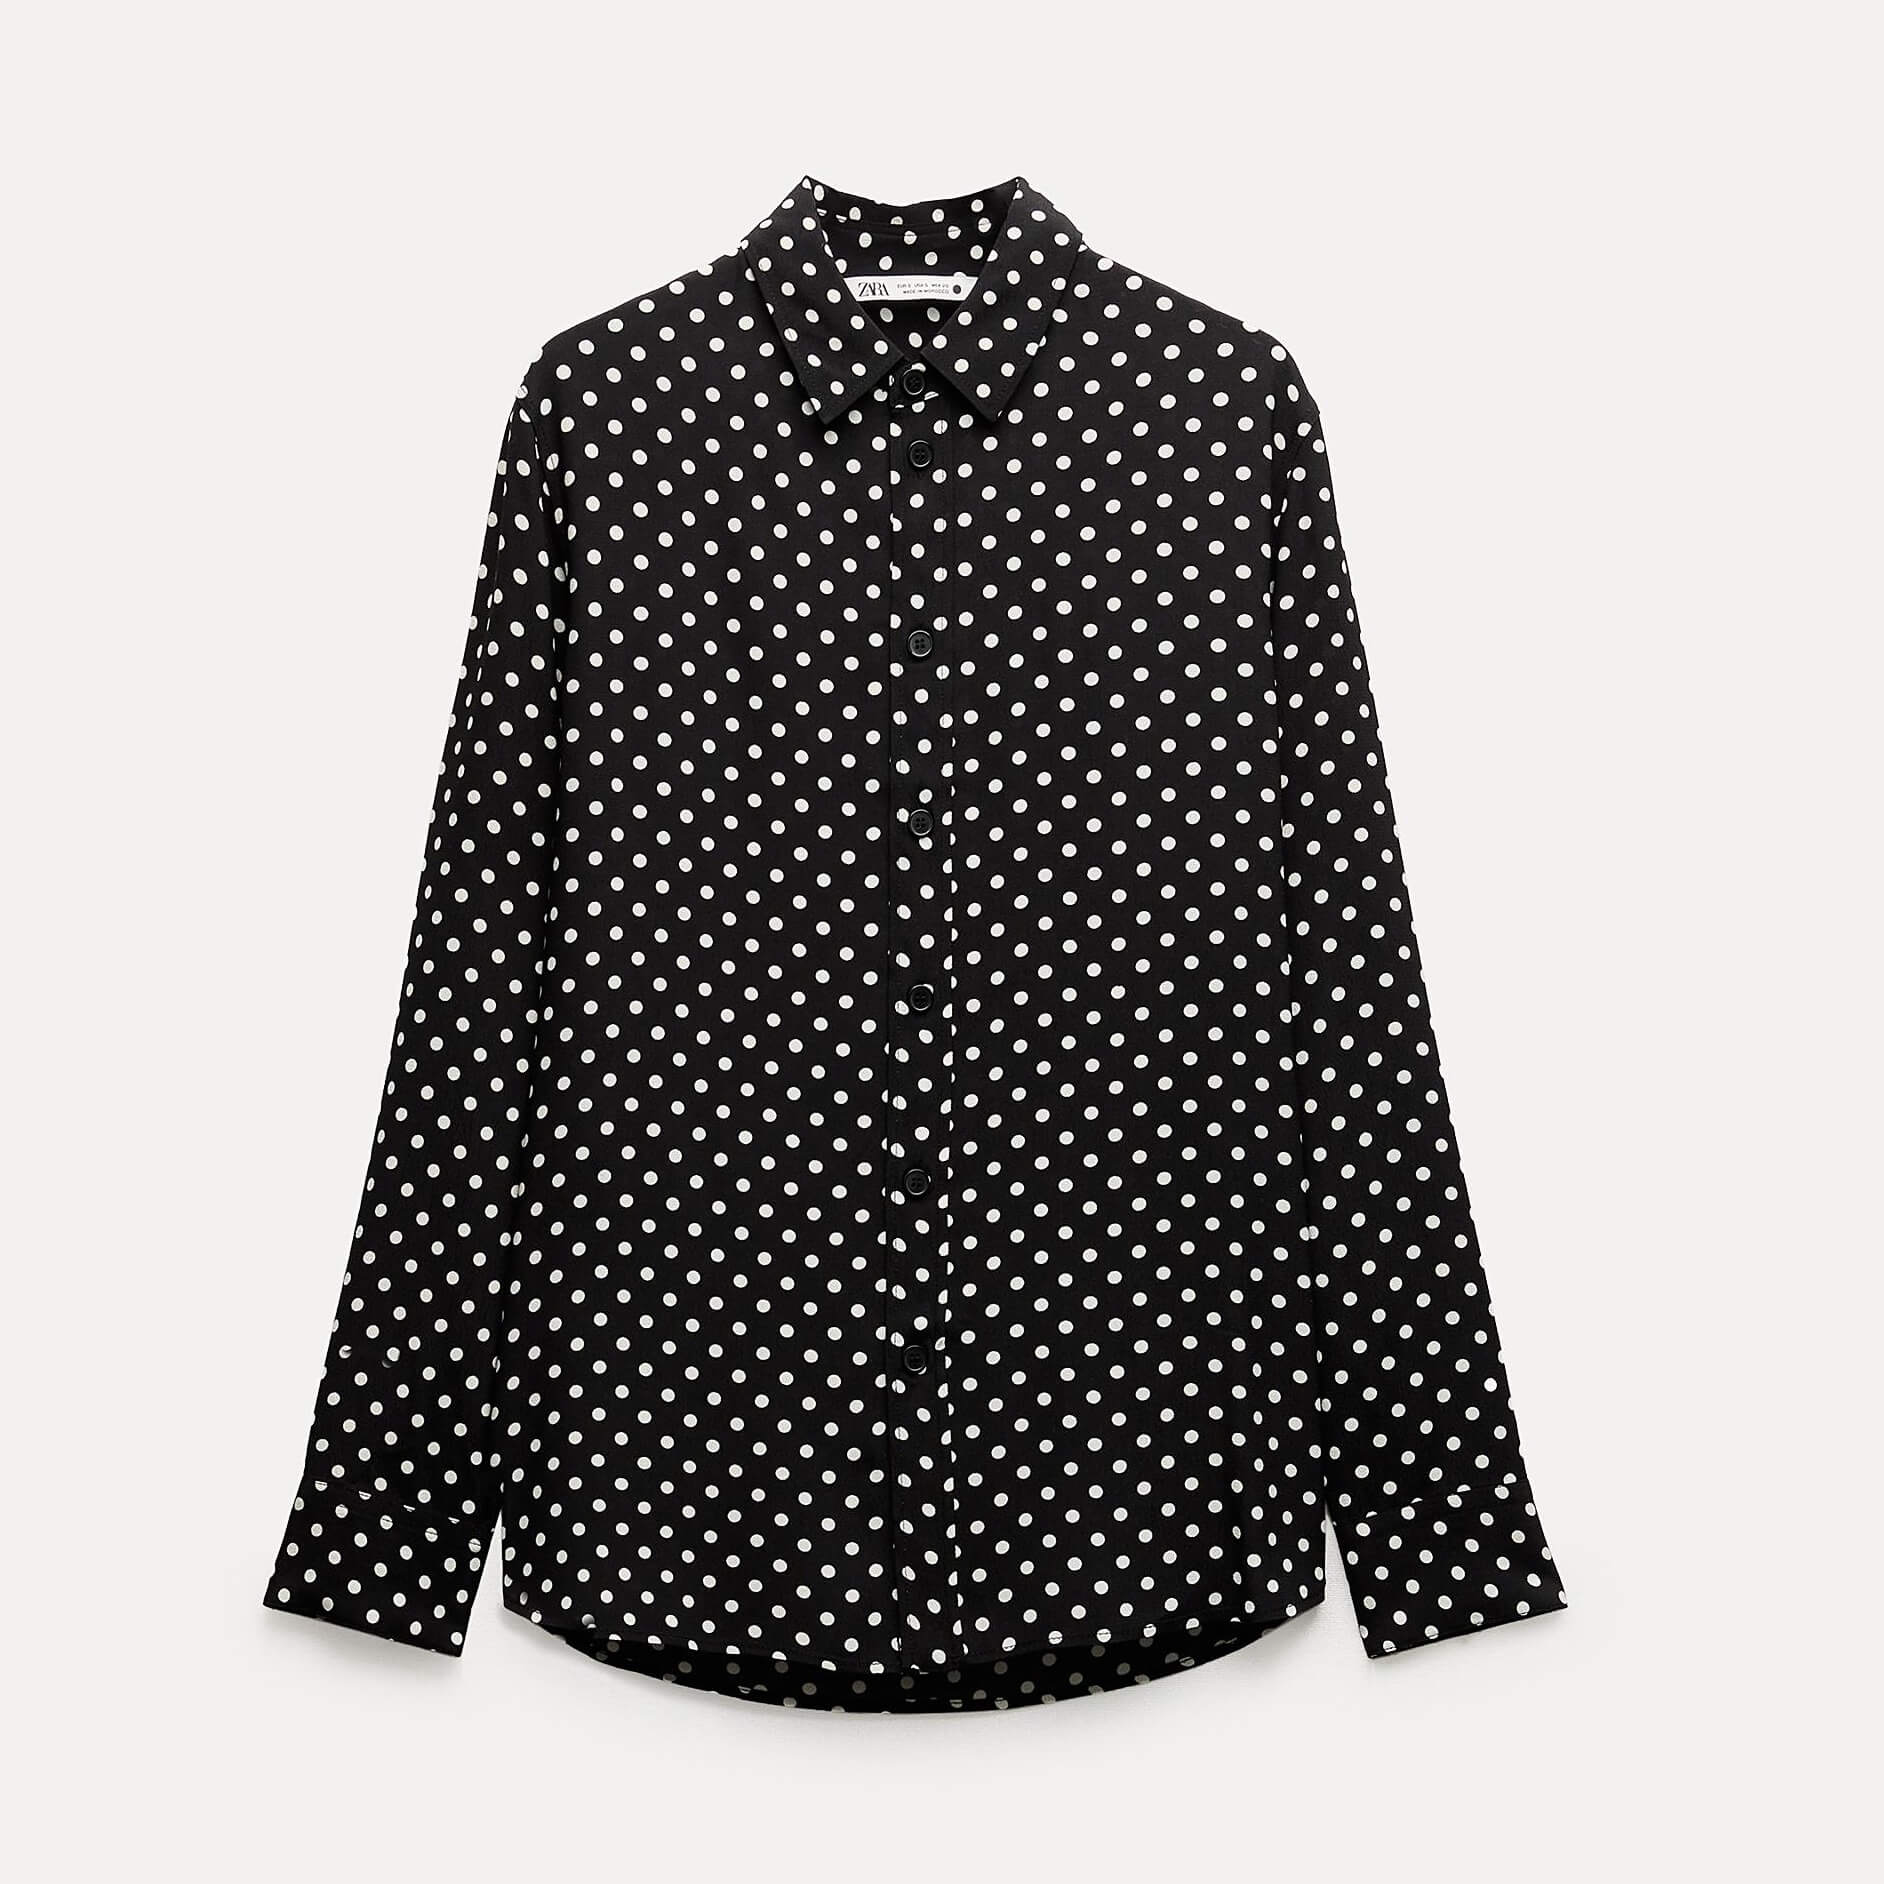 Рубашка Zara ZW Collection Polka Dot Print, черный/белый рубашка zara semi sheer raised polka dot черный